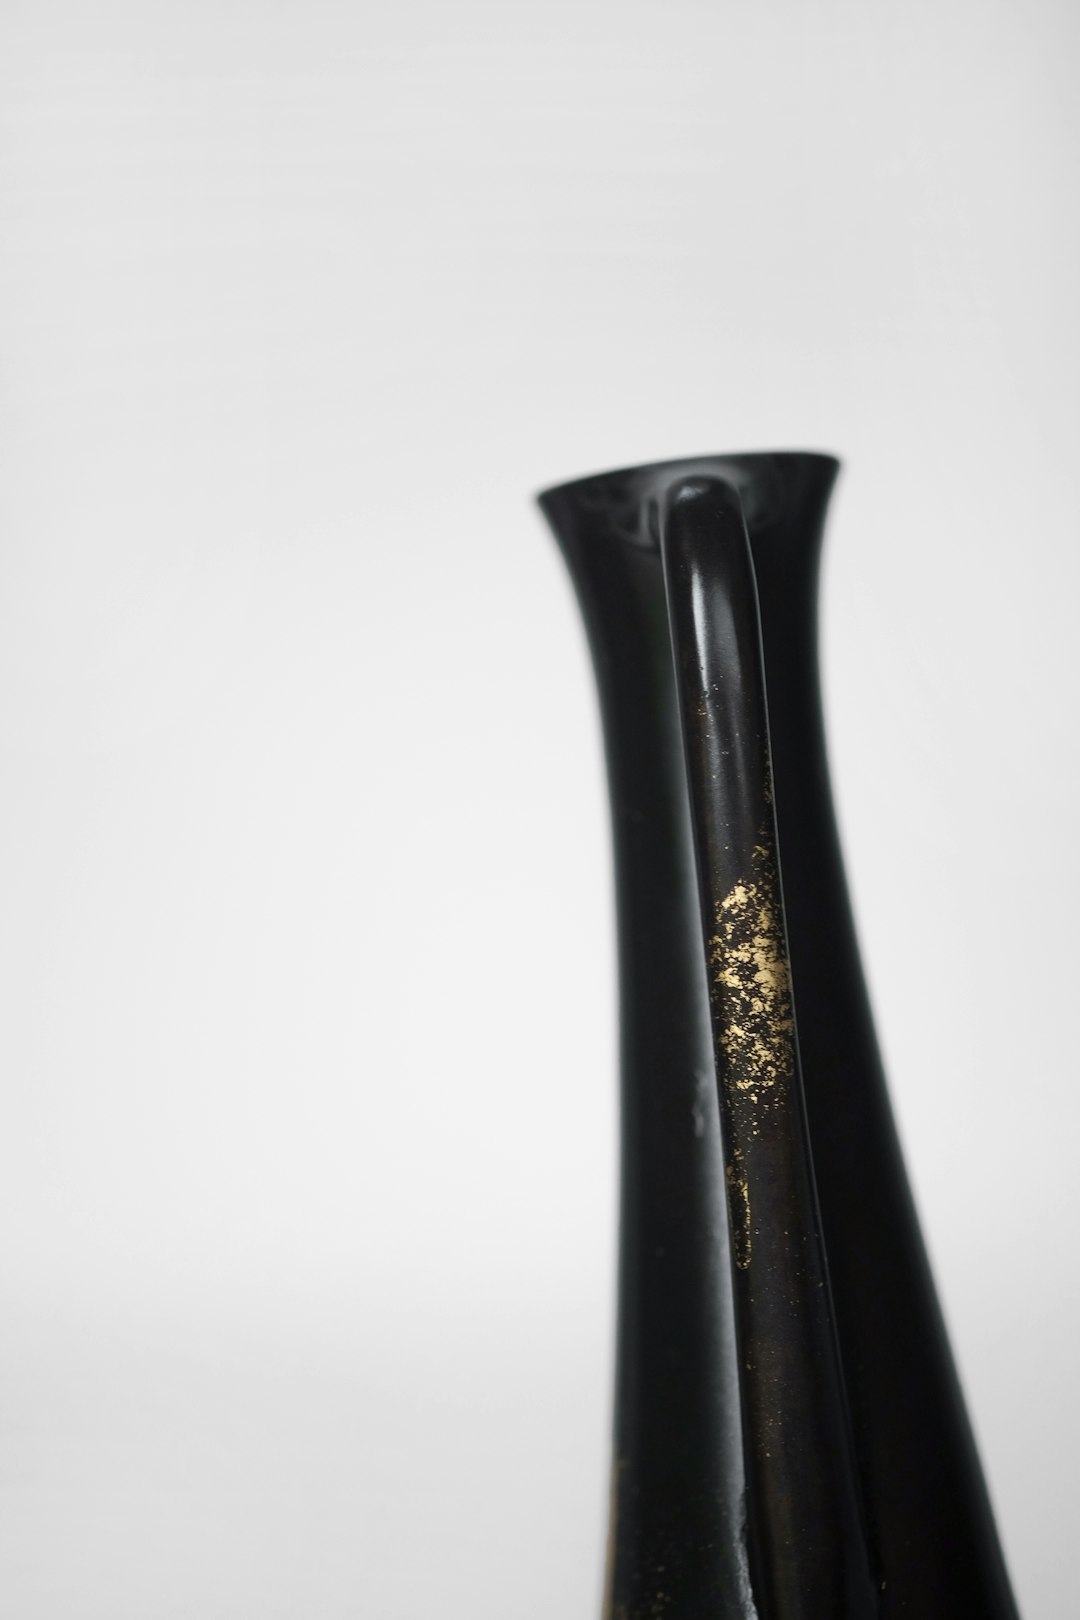 black and white ceramic vase